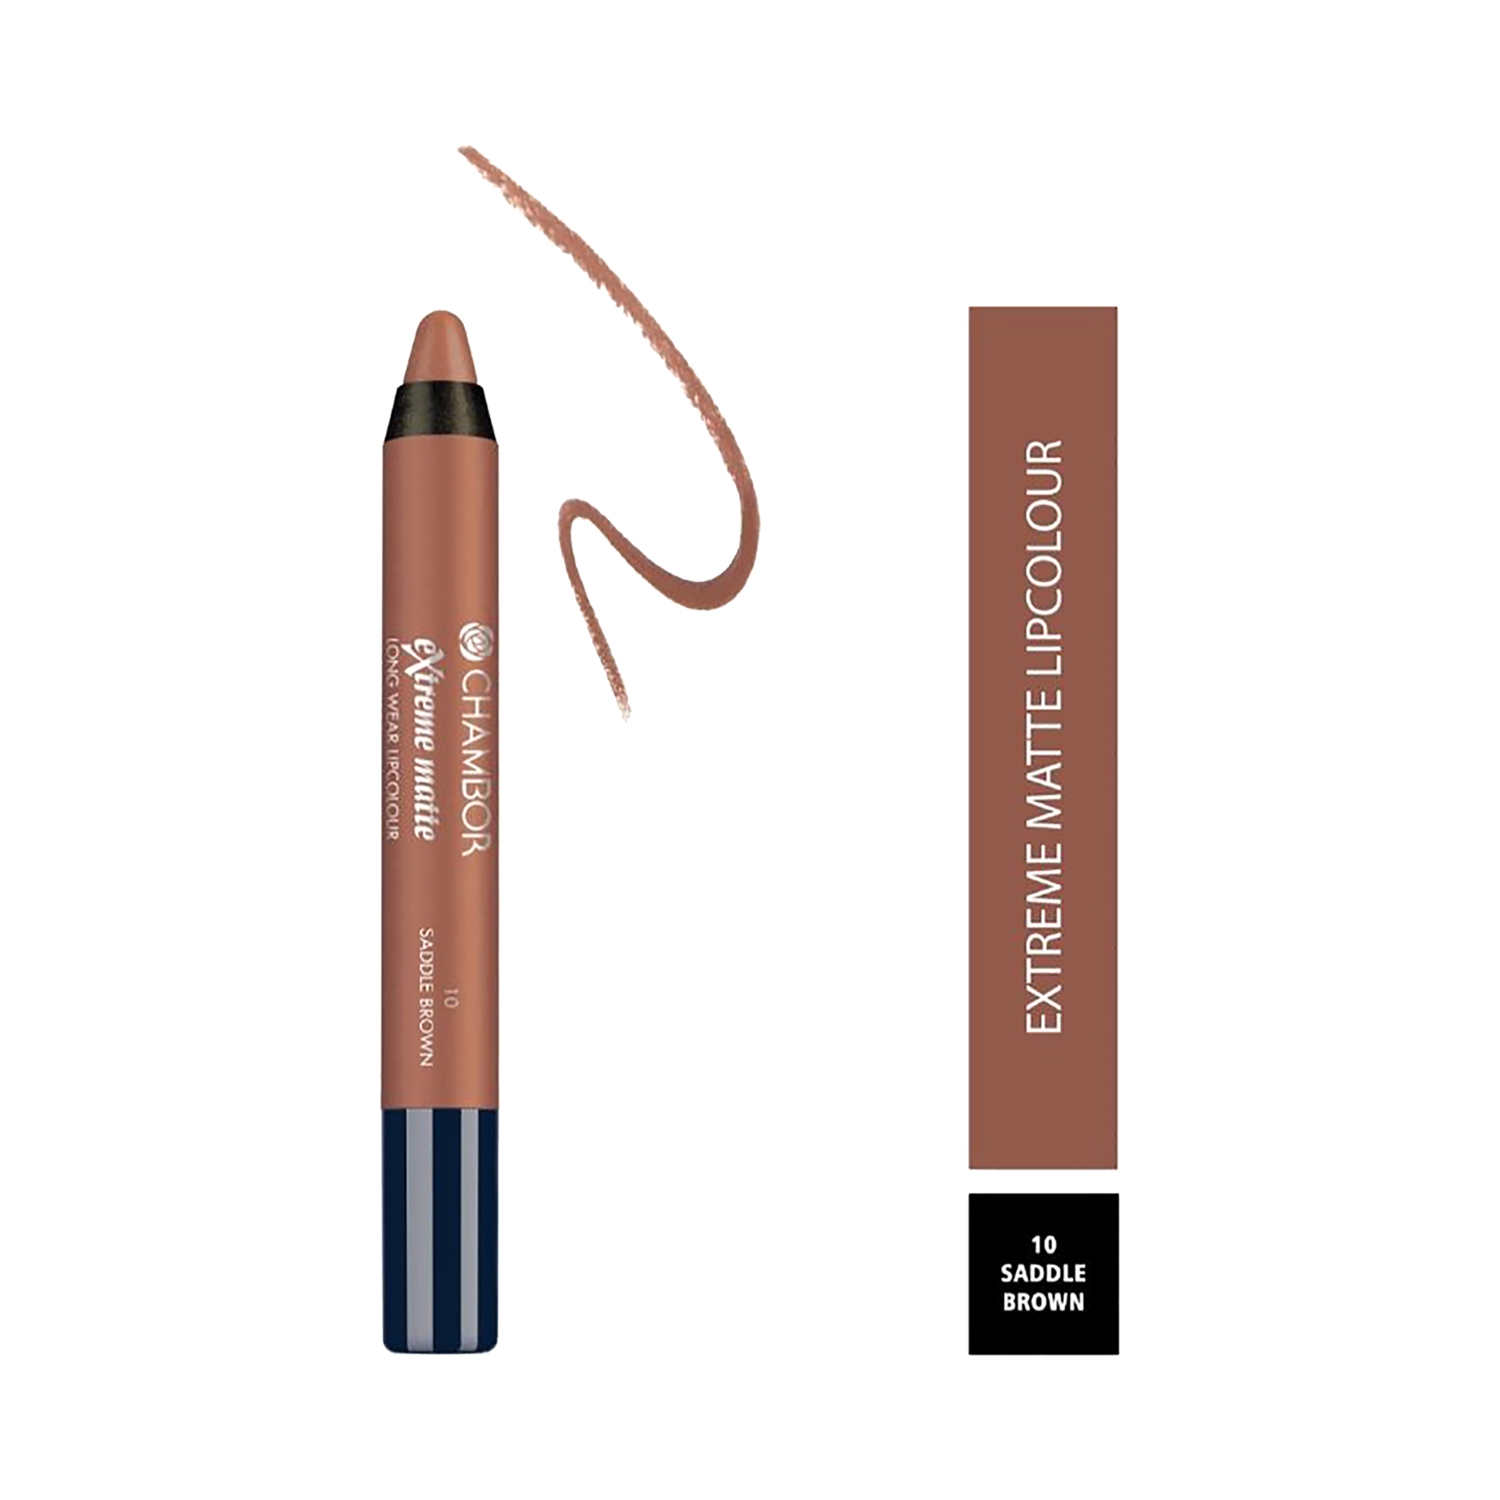 Chambor | Chambor Extreme Matte Long Wear Lip Color + Hyaluronic Acid - N 10 Saddle Brown (2.8g)